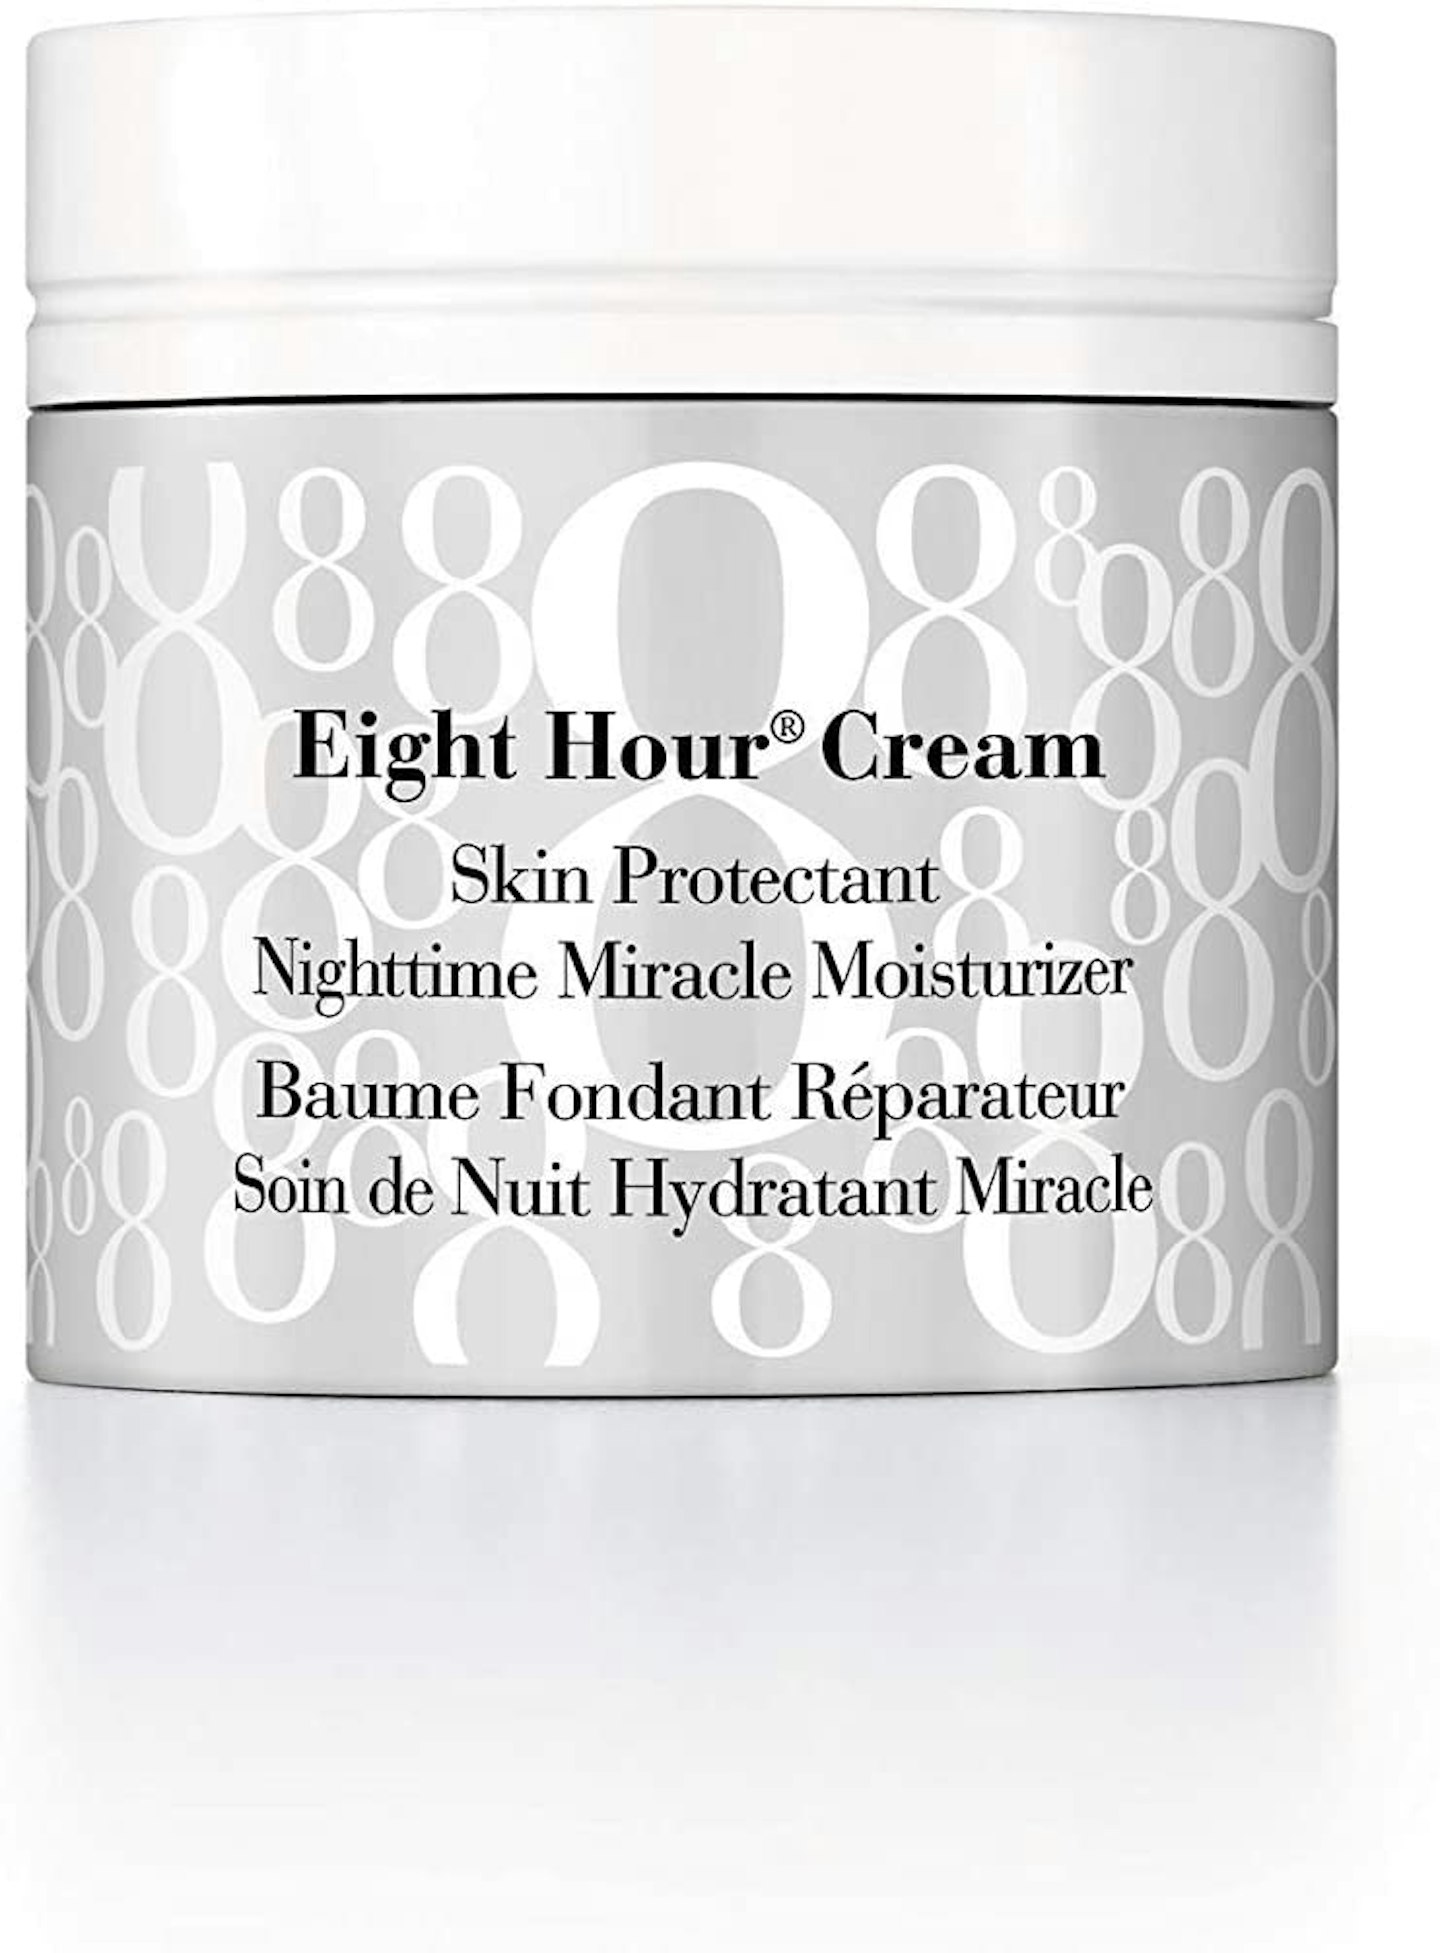 Elizabeth Arden Eight Hour Cream Skin Protectant Nighttime Miracle Moisturizer